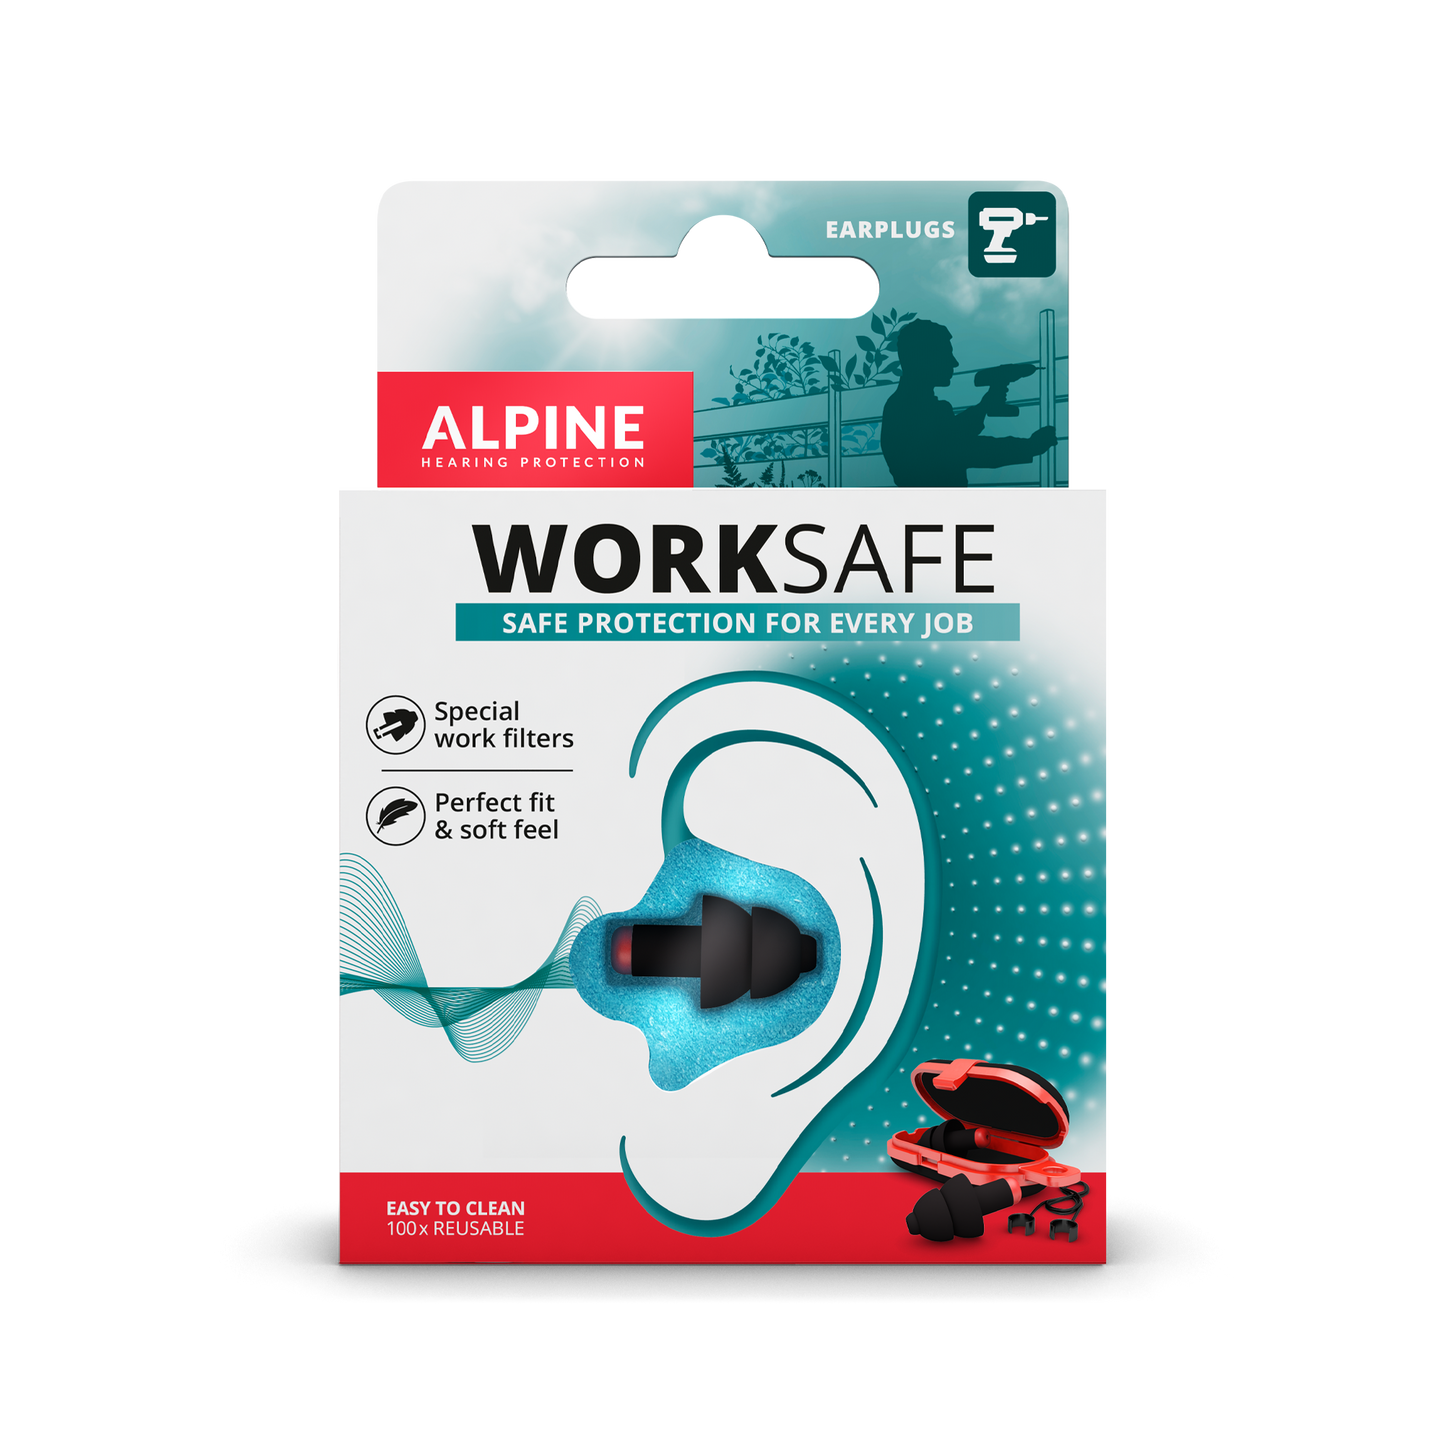 WorkSafe Alpine Protection Auditive Bouchons d’oreilles Casque anti-bruit red dot award protéger votre oreille travail projets hobby Bricolage